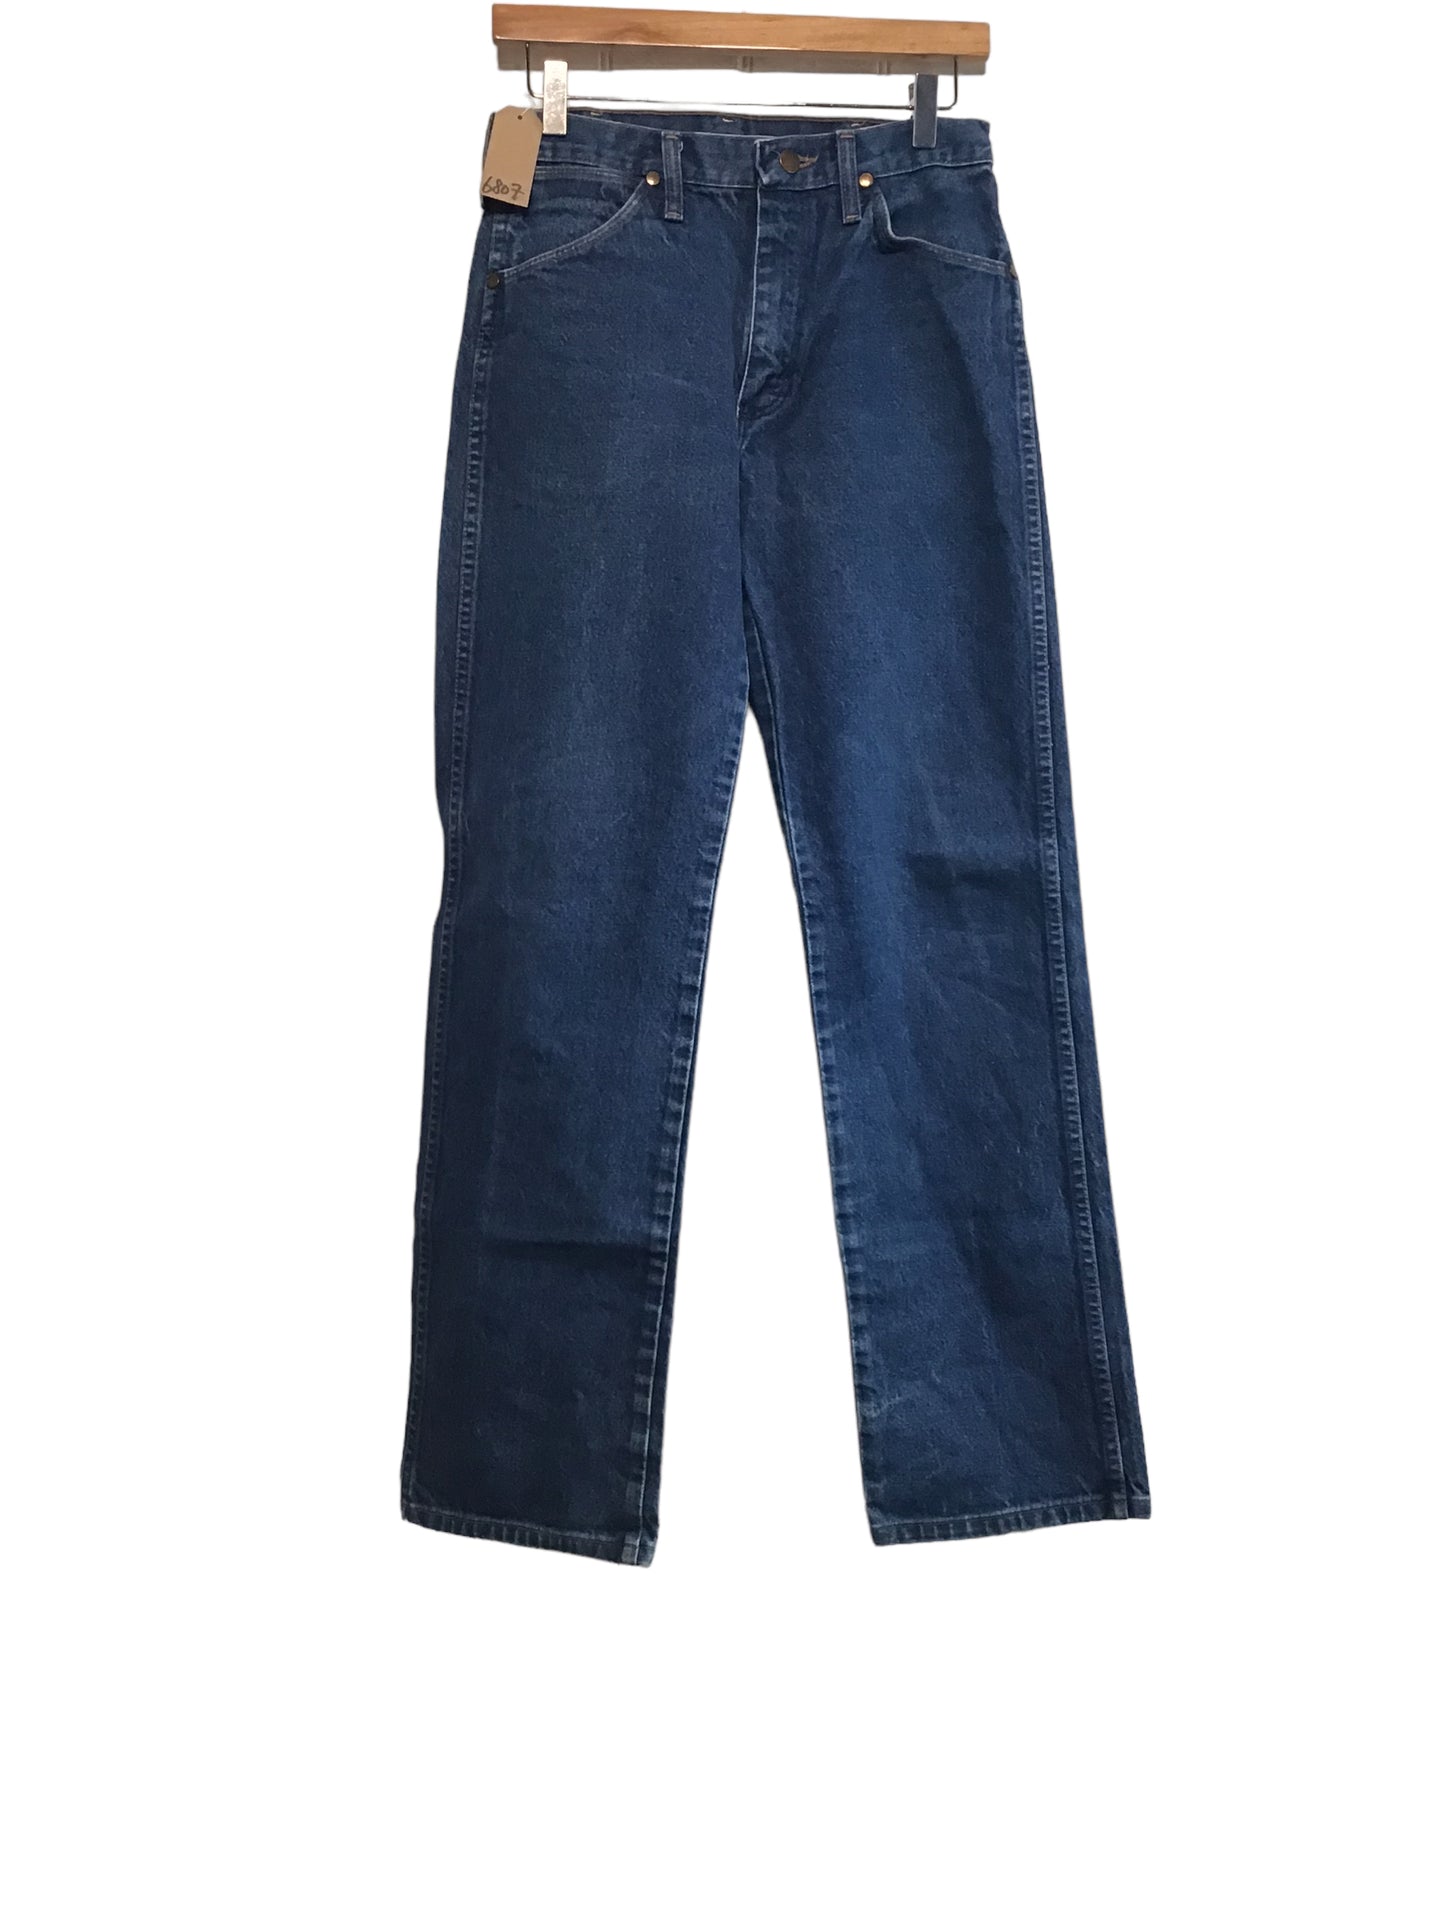 Wrangler Jeans (29x30)